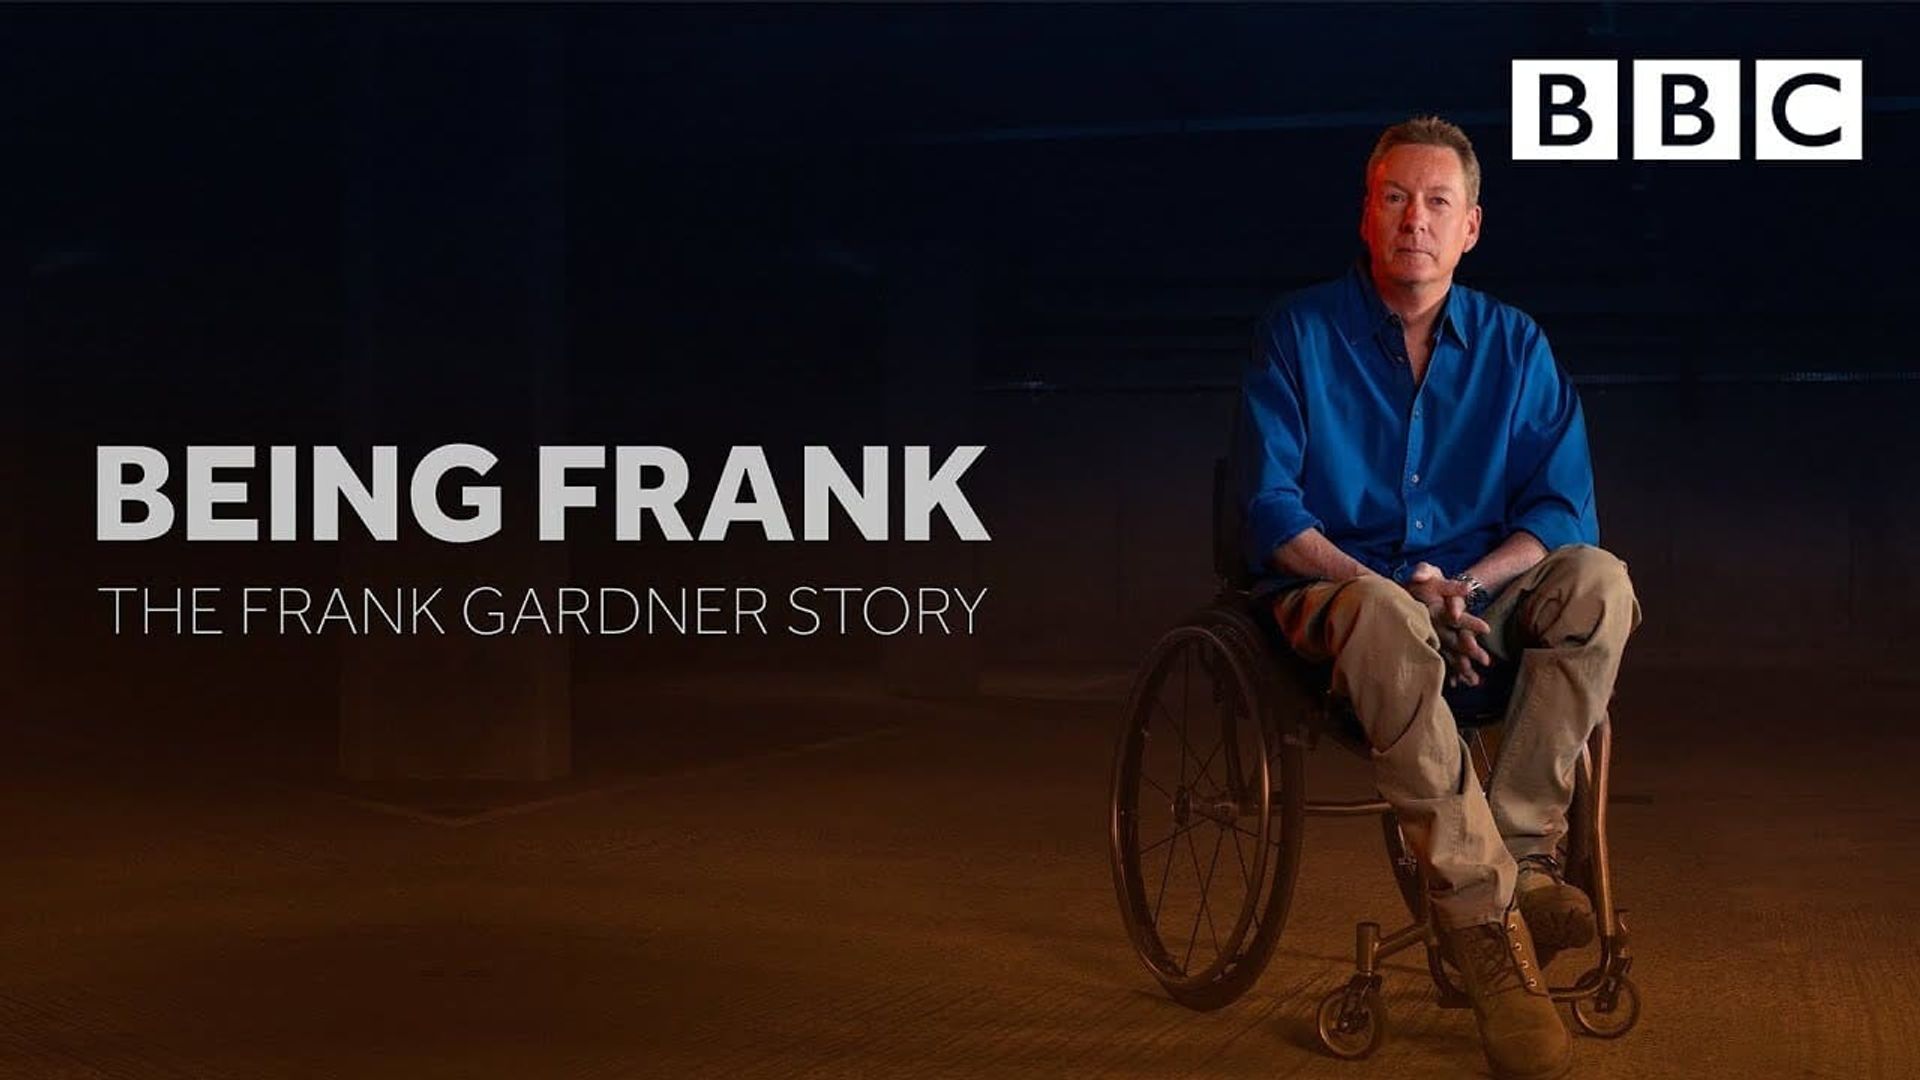 Being Frank: The Frank Gardner Story background